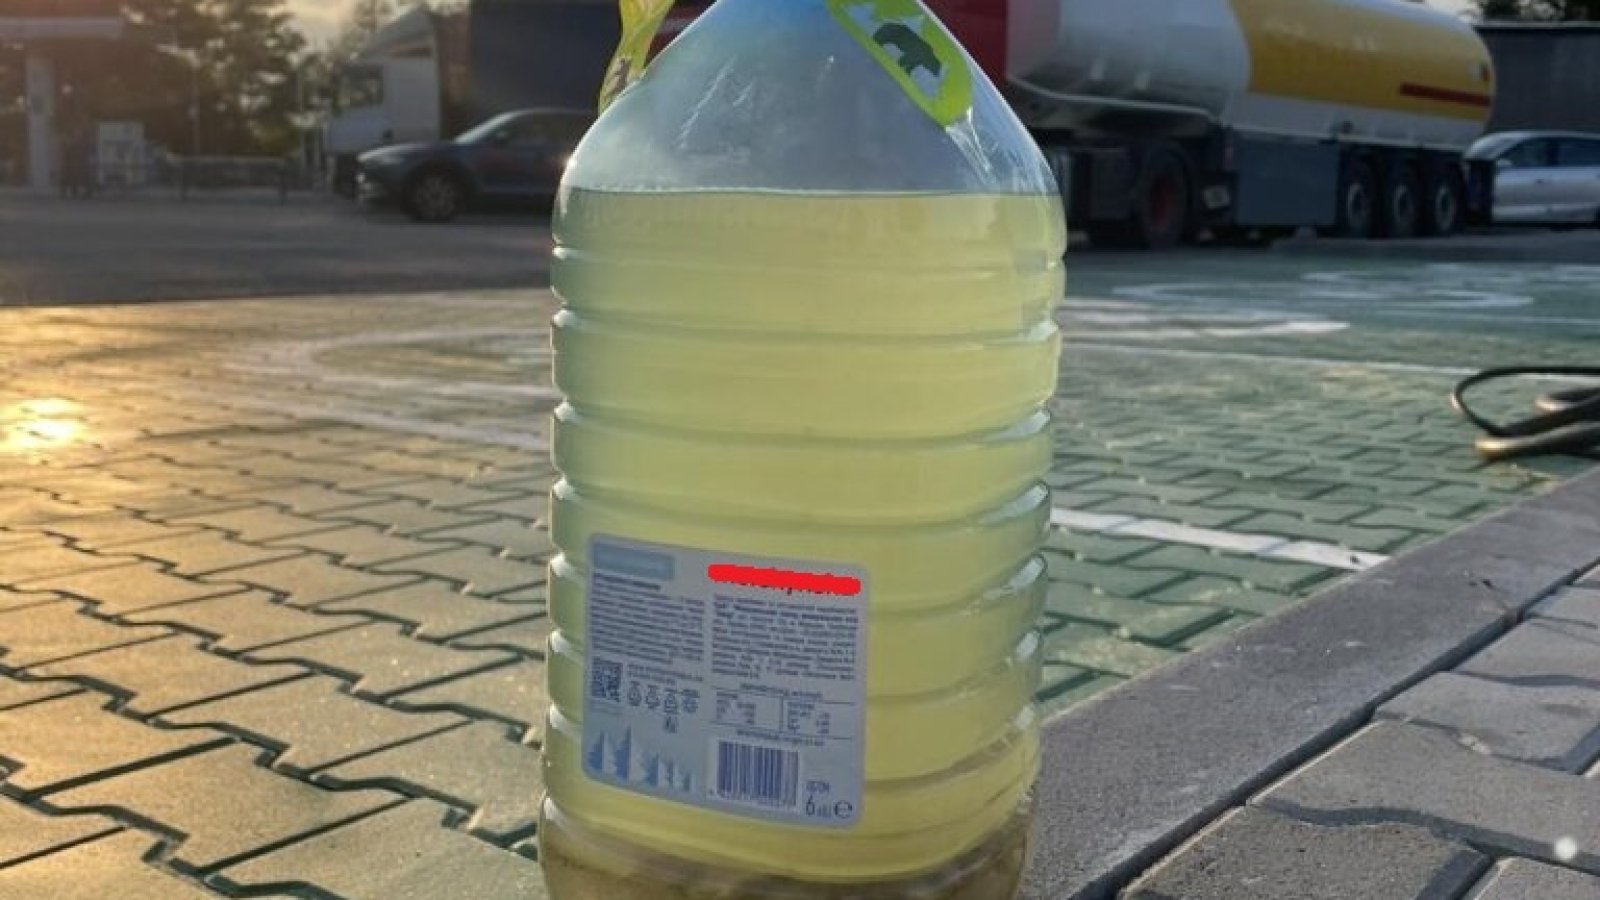 ВИДЕО: вместо бензина на заправке в Риге заливали…воду